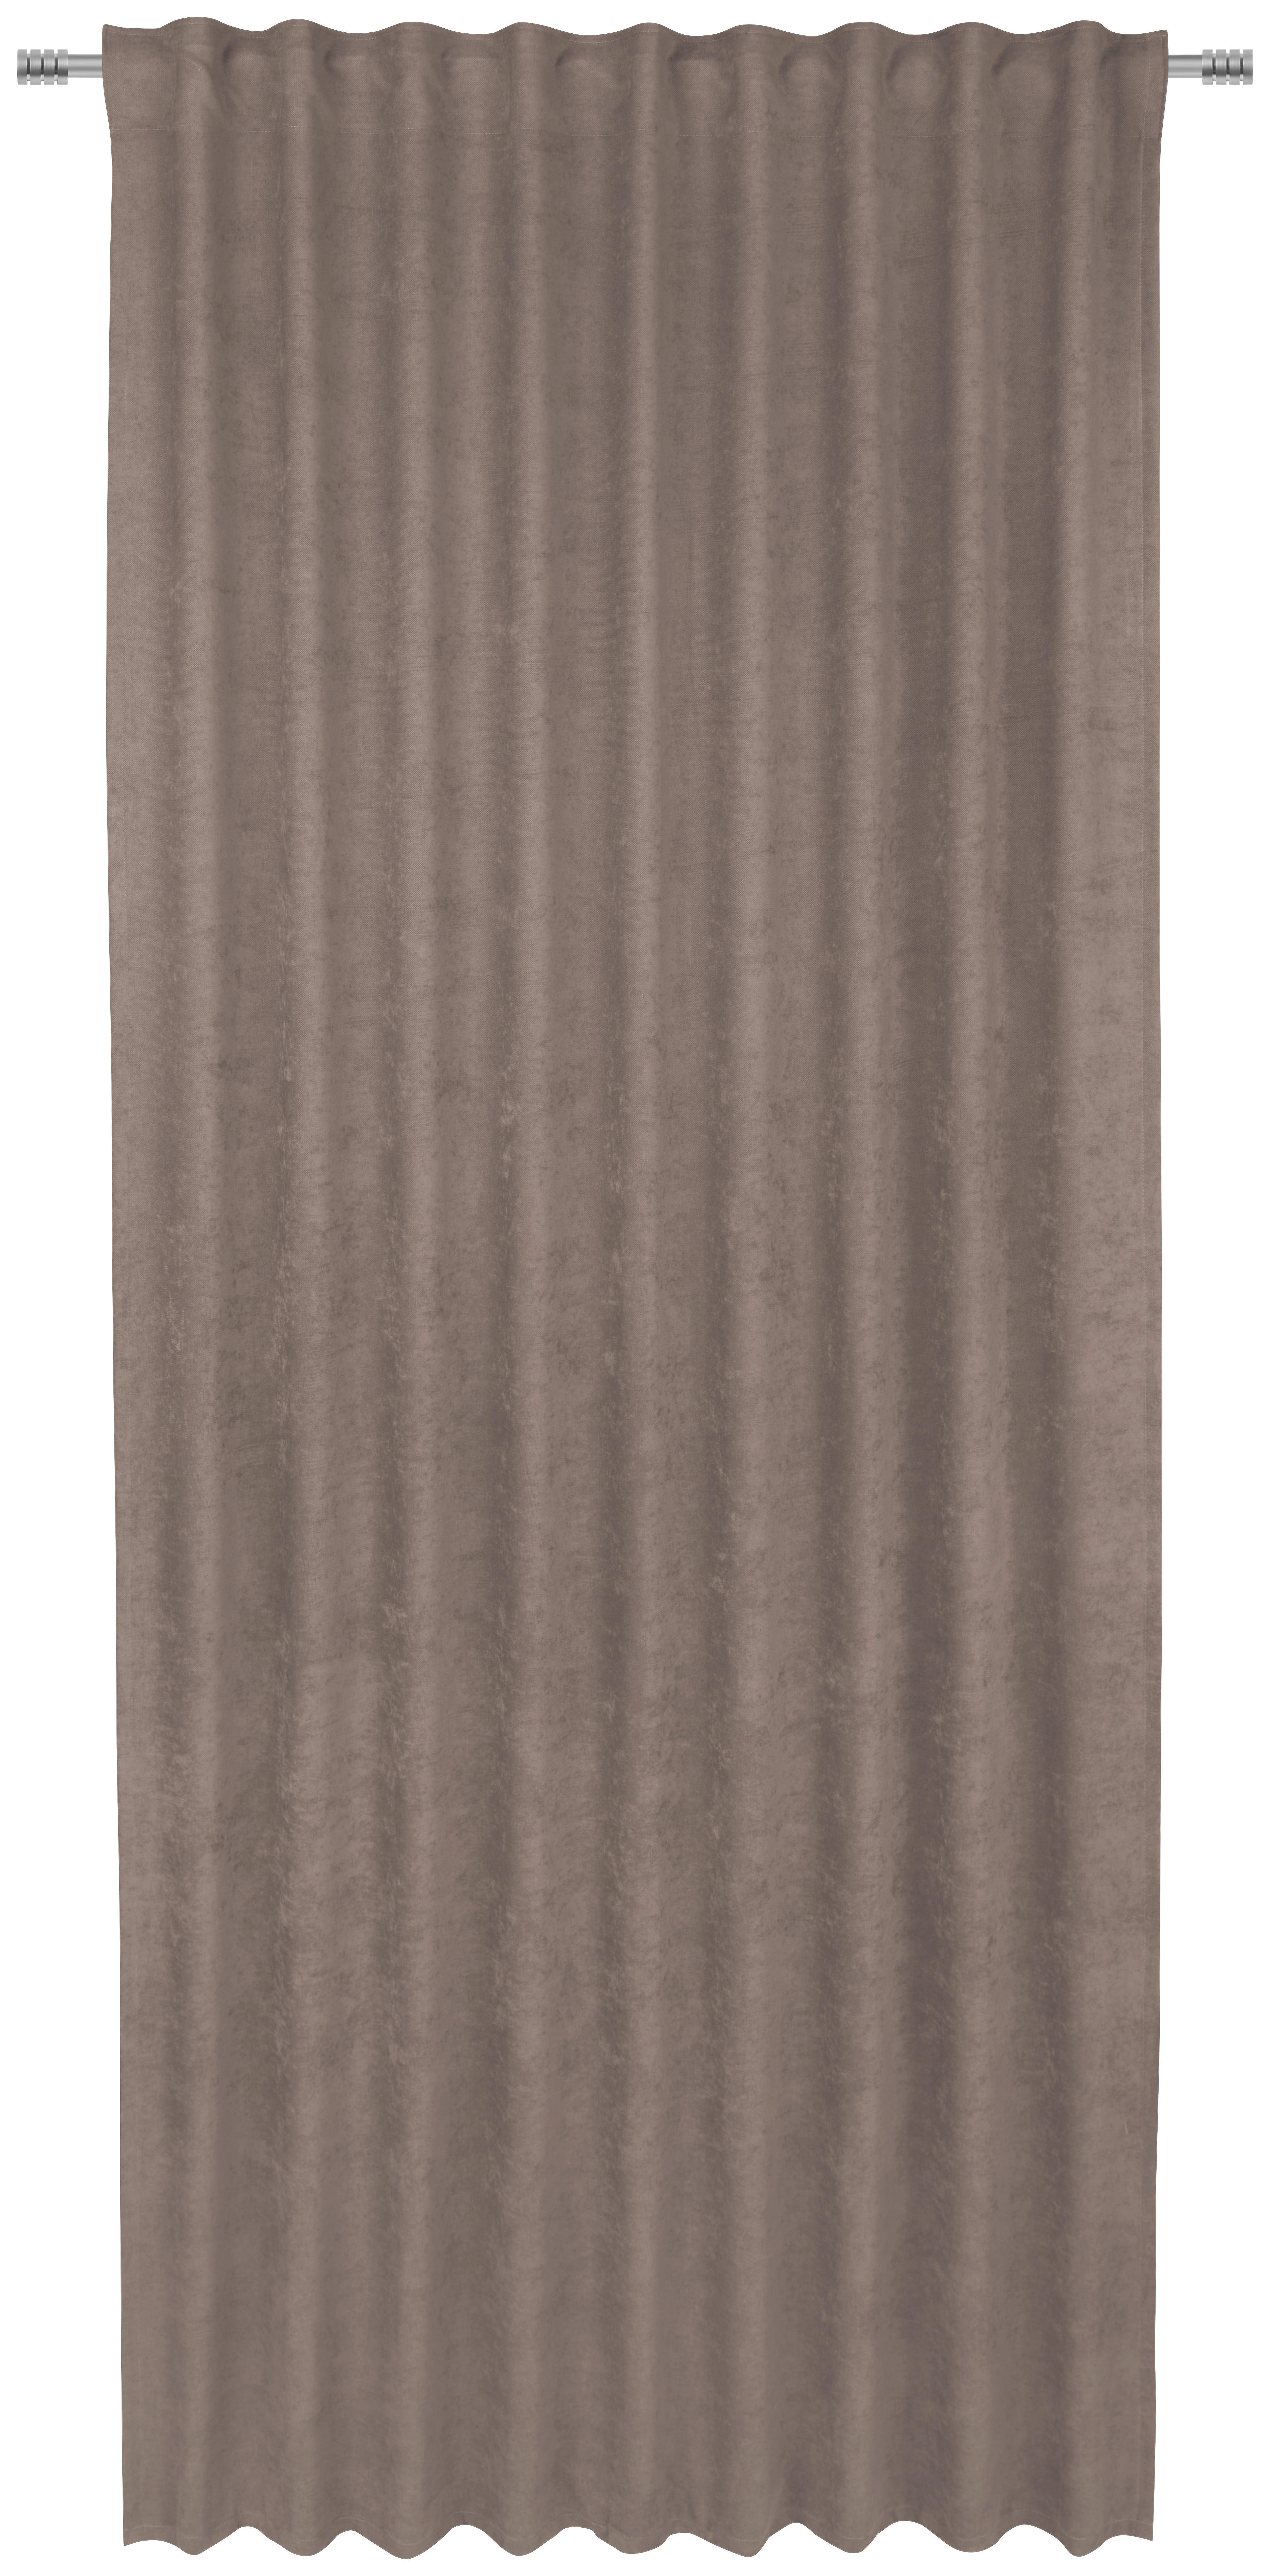 FERTIGVORHANG PROMO blickdicht 140/245 cm   - Taupe, KONVENTIONELL, Textil (140/245cm) - Esposa